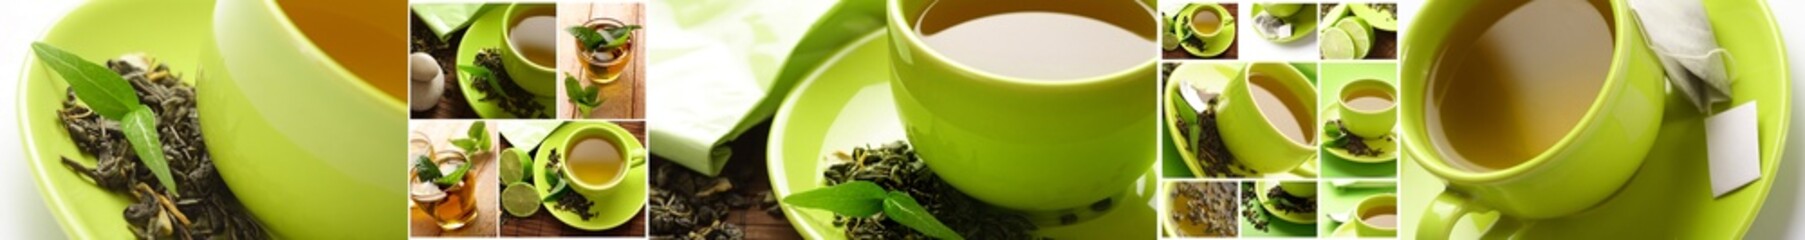 Tea in a green mug